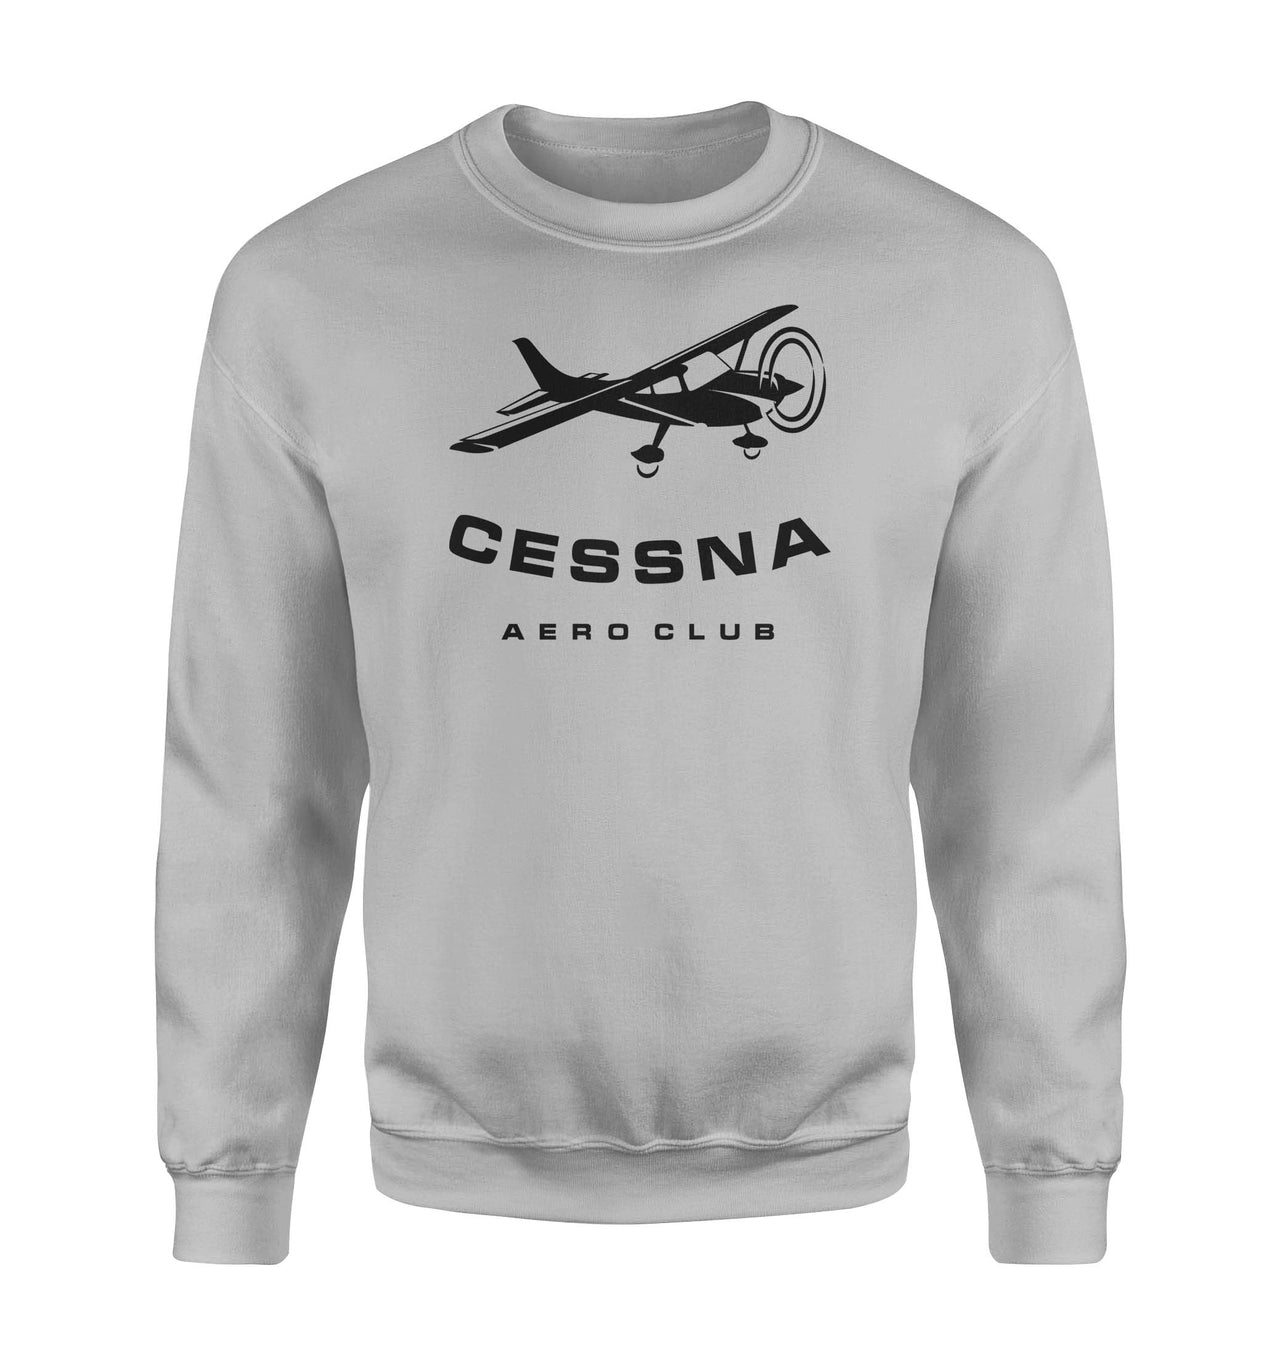 Cessna Aeroclub Designed Sweatshirts